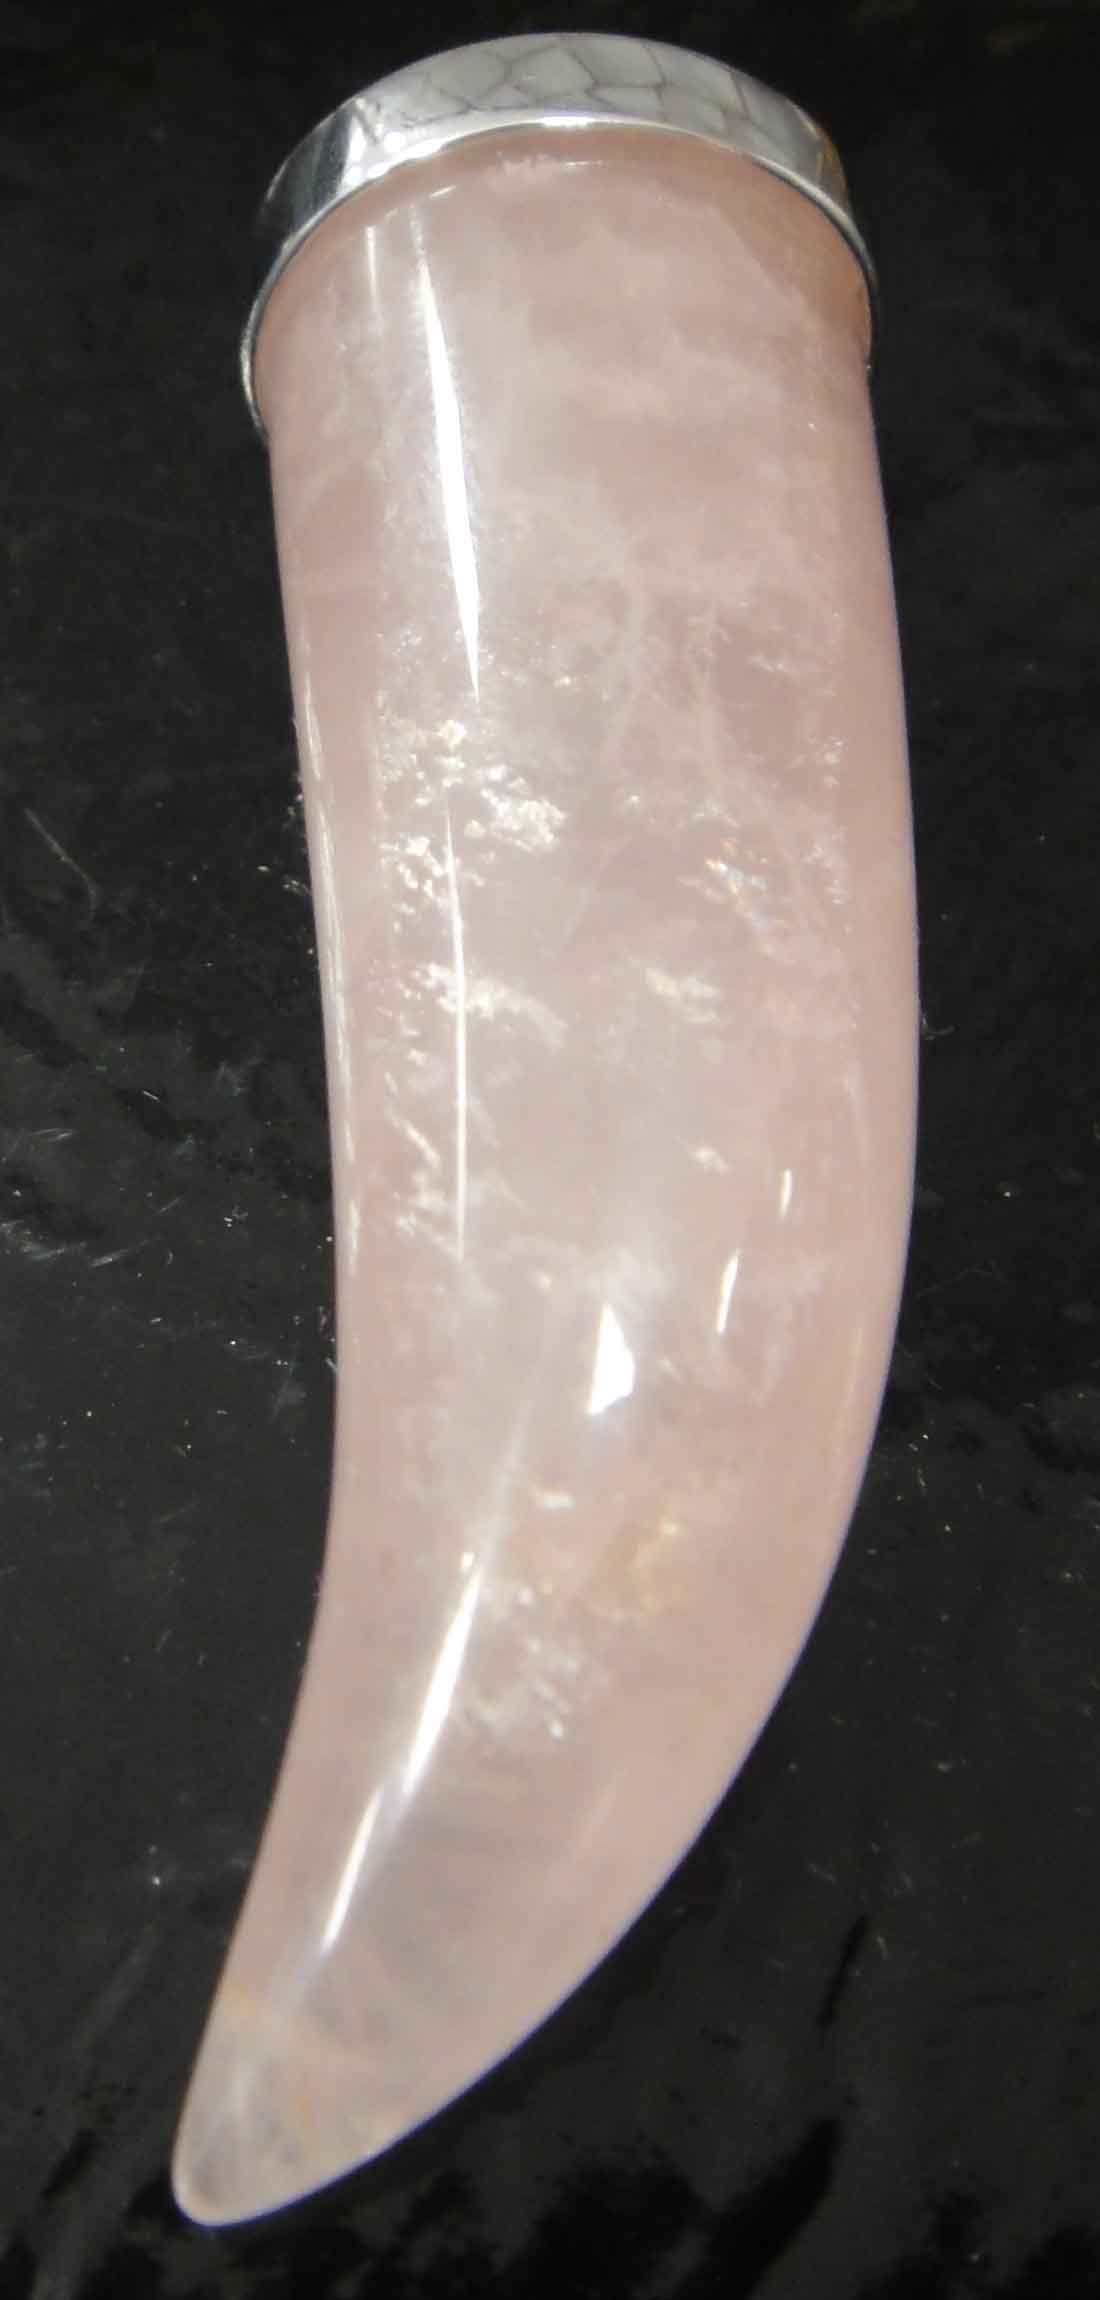 Handmade rose quartz and sterling silver fang pendant